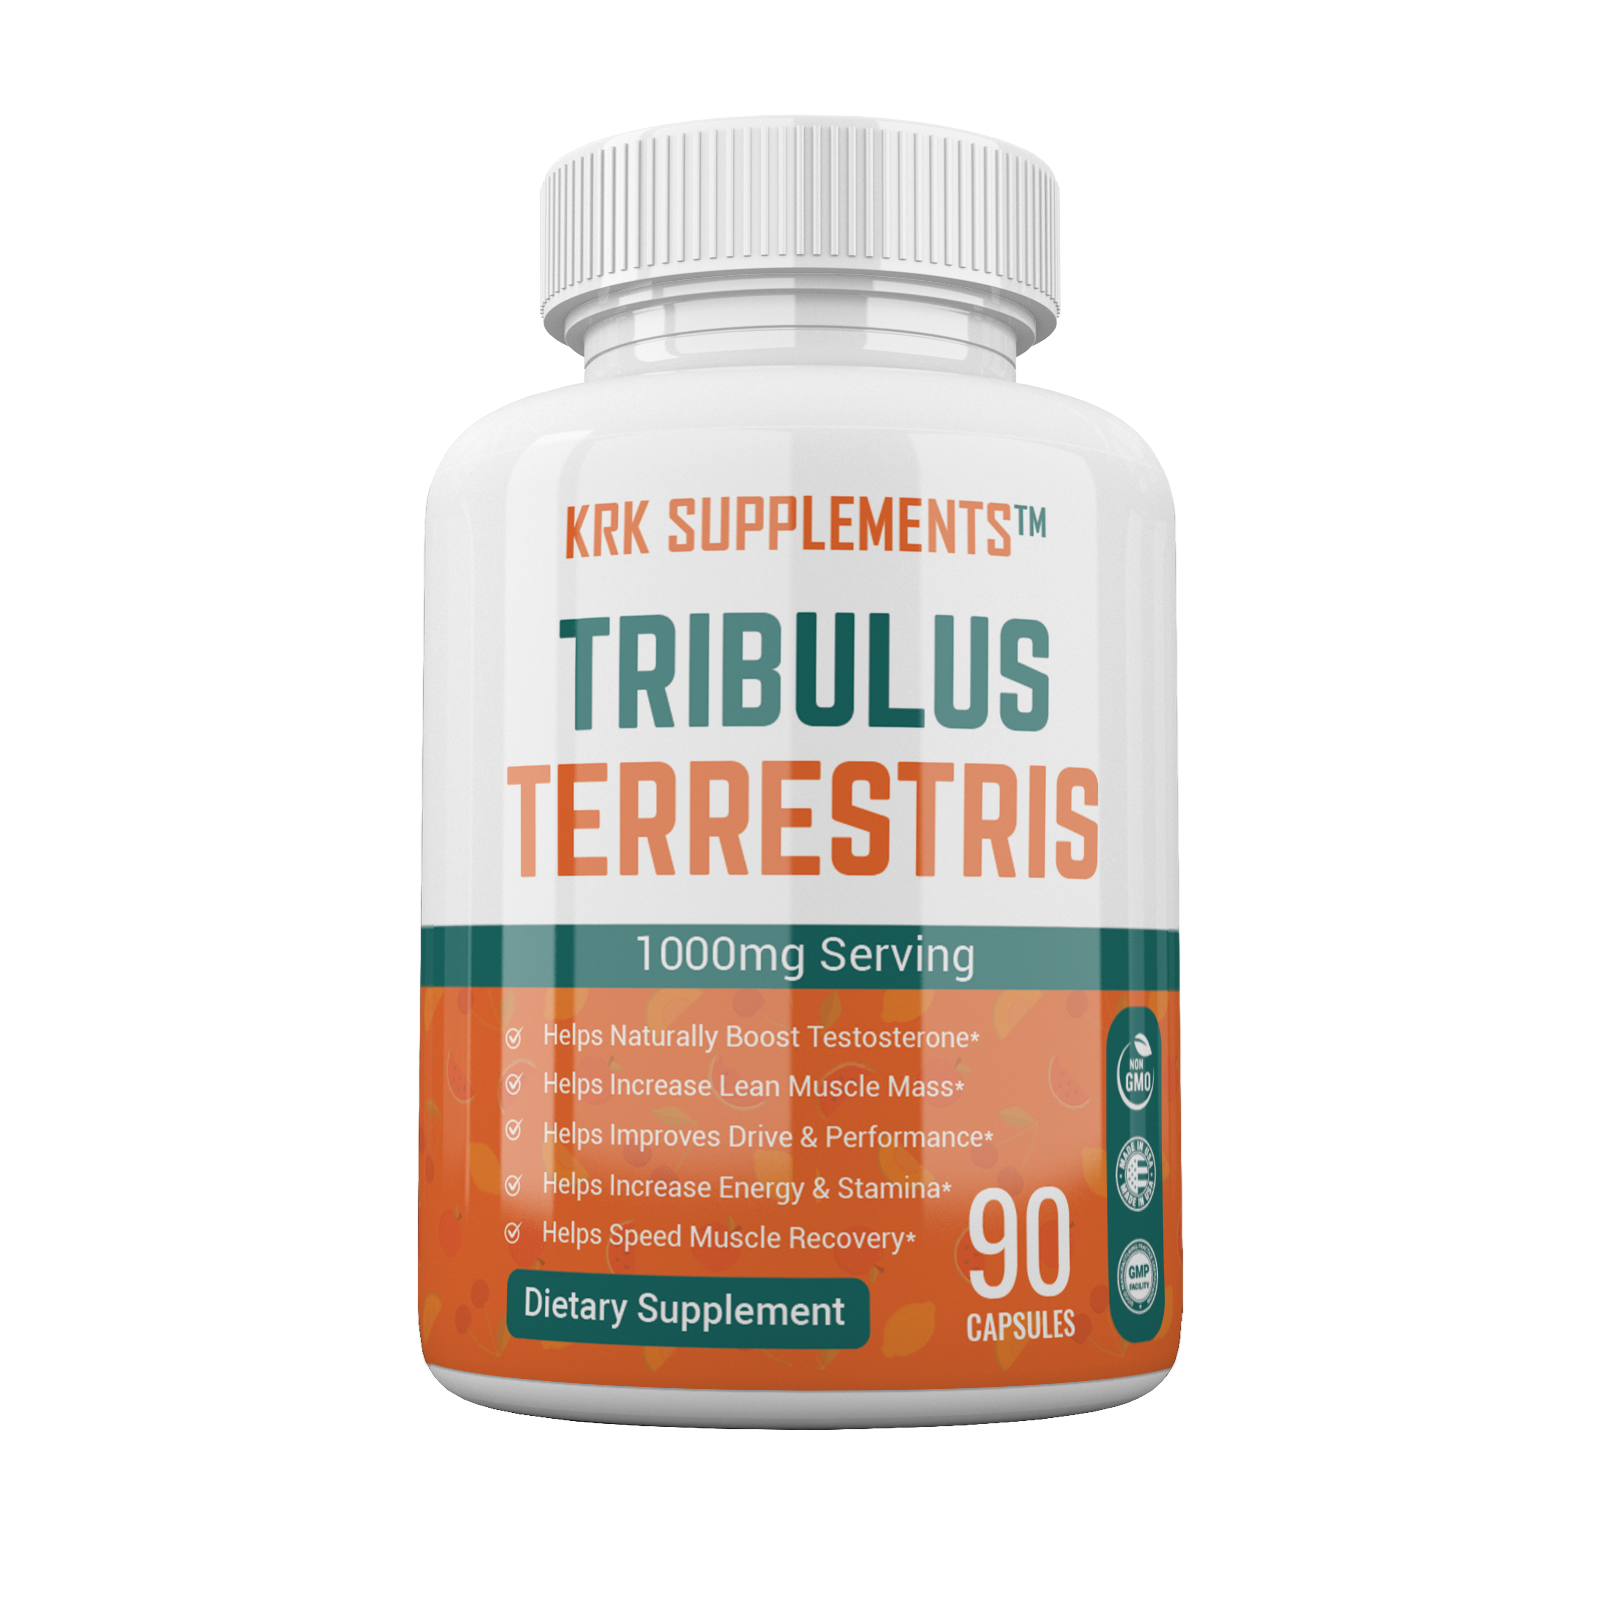 1 Bottle Tribulus Terrestris 1000mg per serving 90 Capsules KRK Supplements 